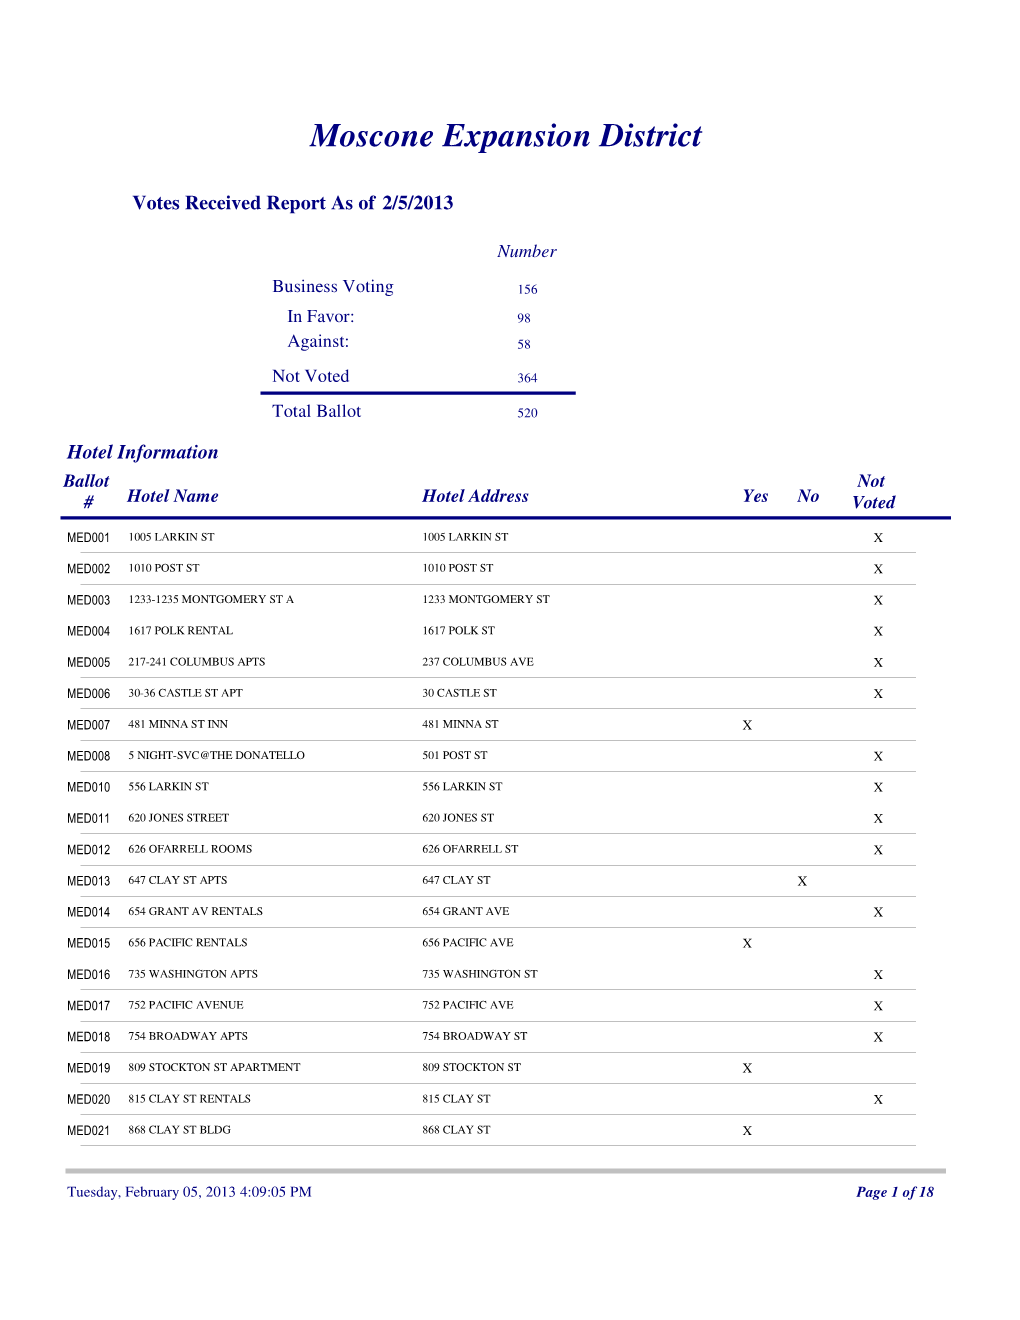 Final Results Report (PDF)